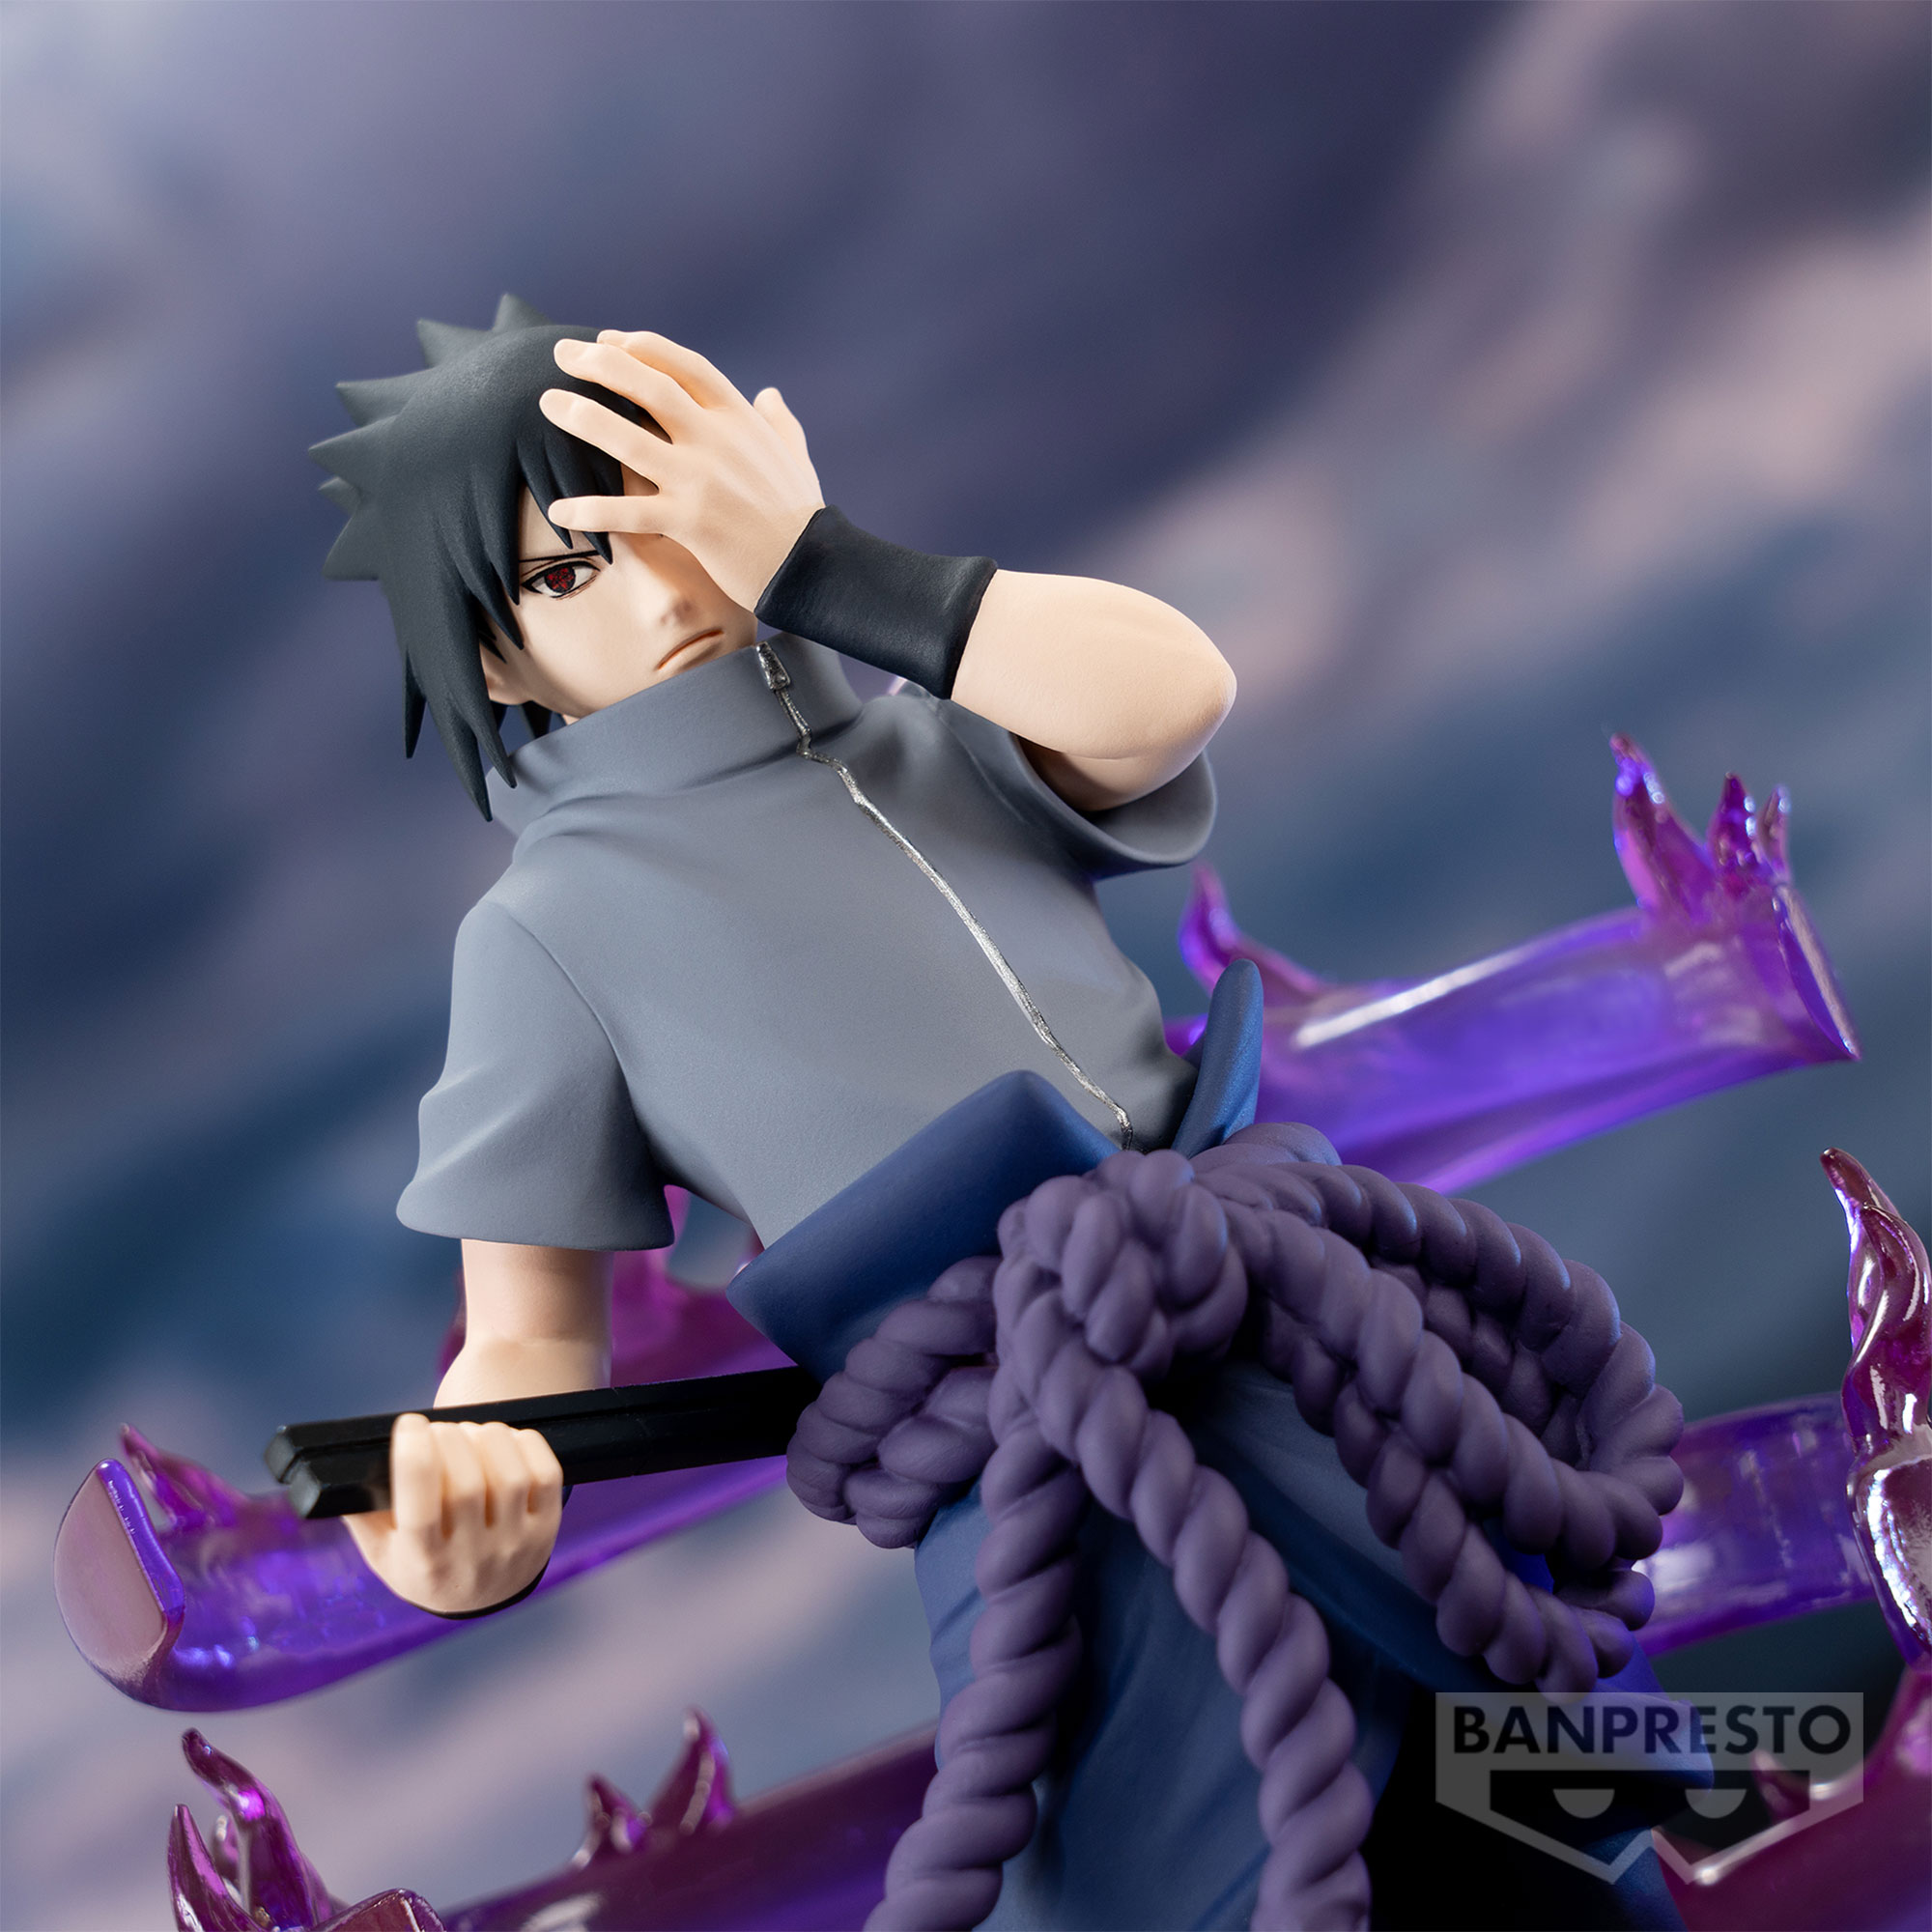 Naruto Shippuden -Vibration Stars- Sasuke 2 uchiha sasuke figure